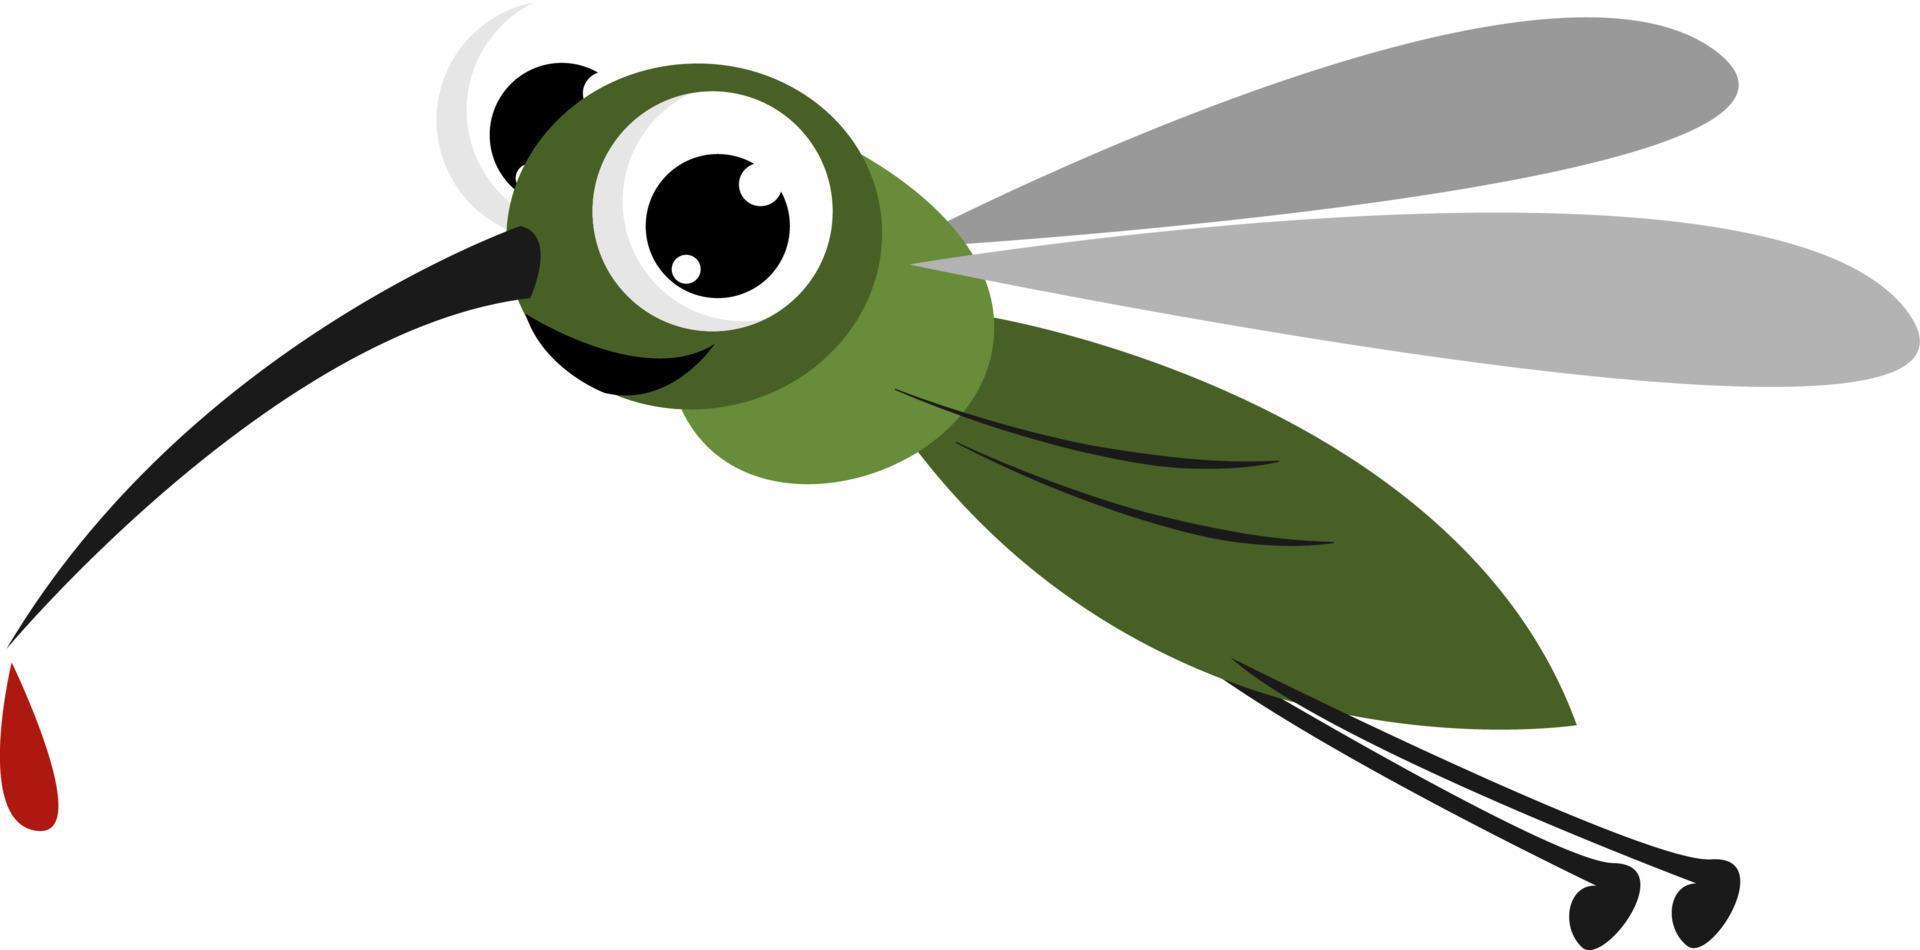 Mosquito bite, illustration, vector on white background.